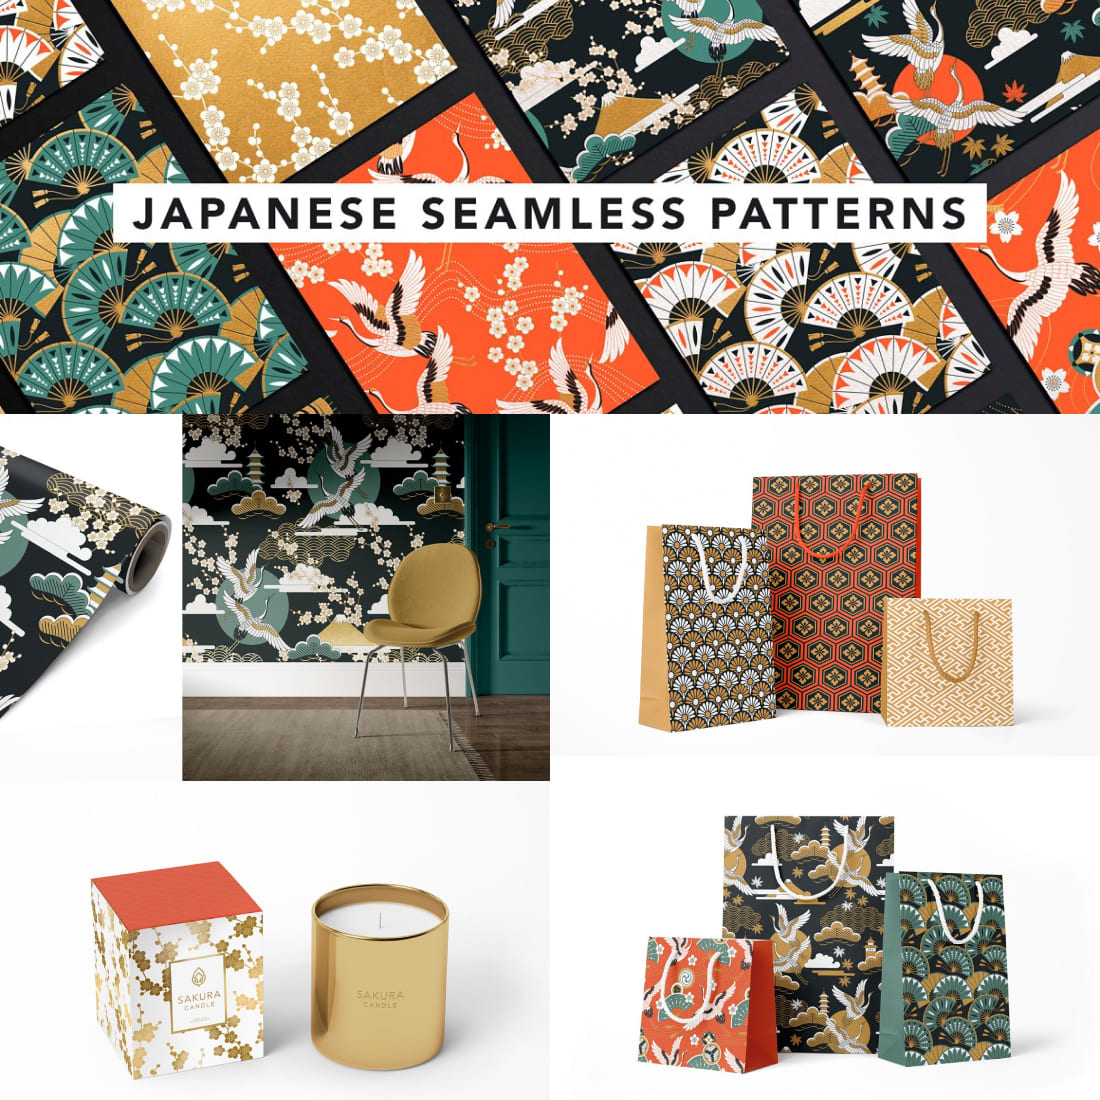 Japanese seamless patterns.